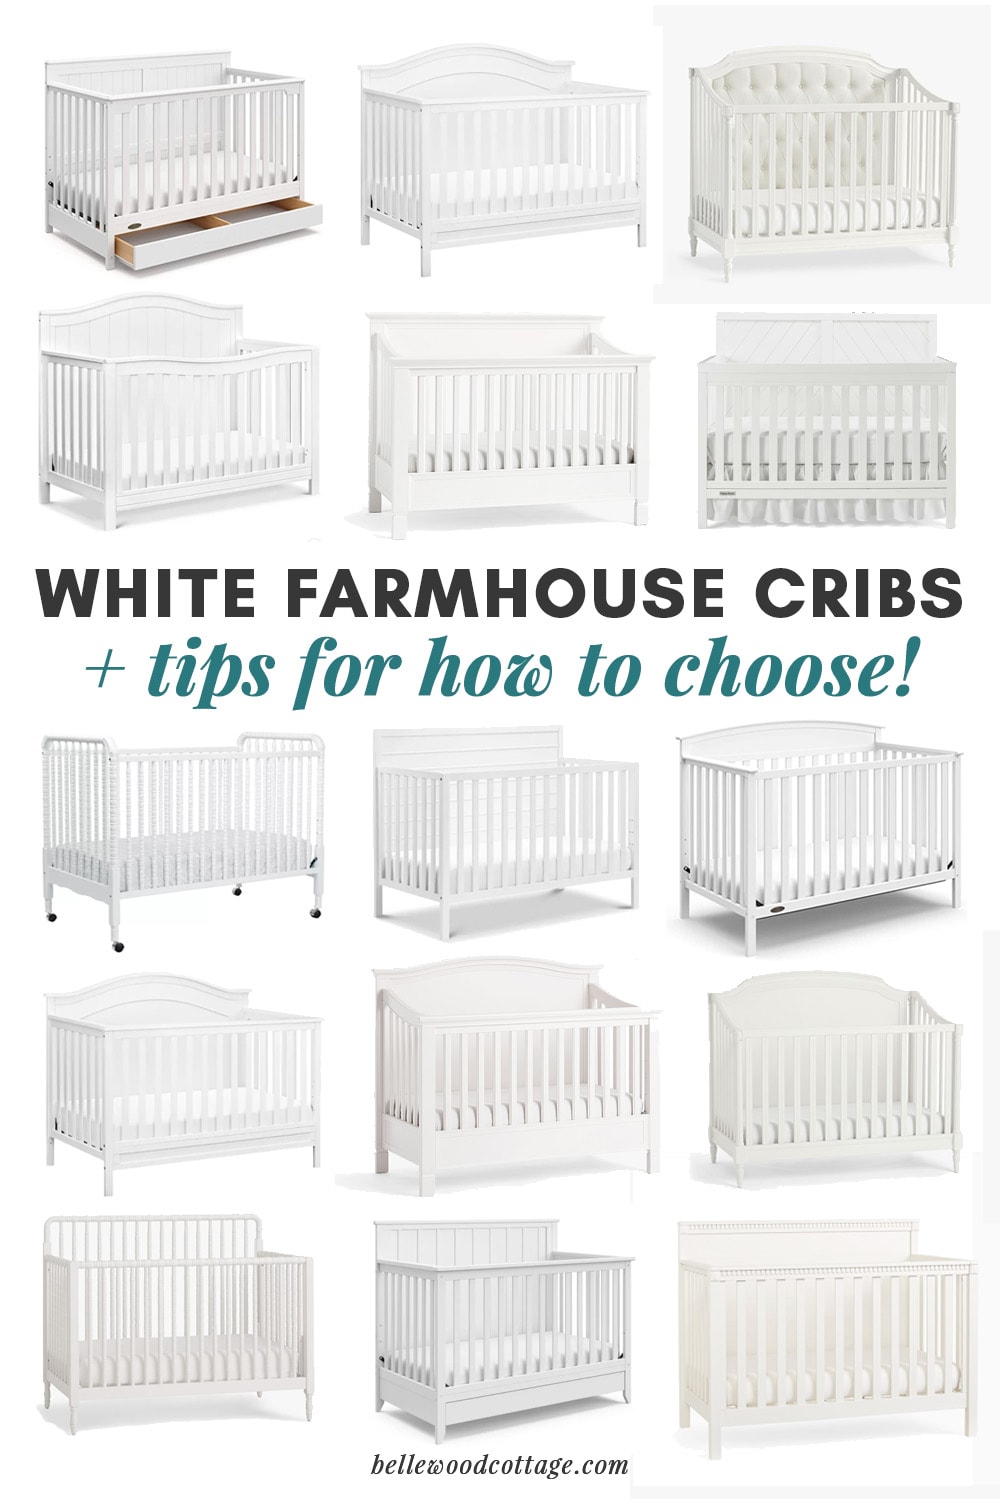 A collage of white farmhouse cribs.